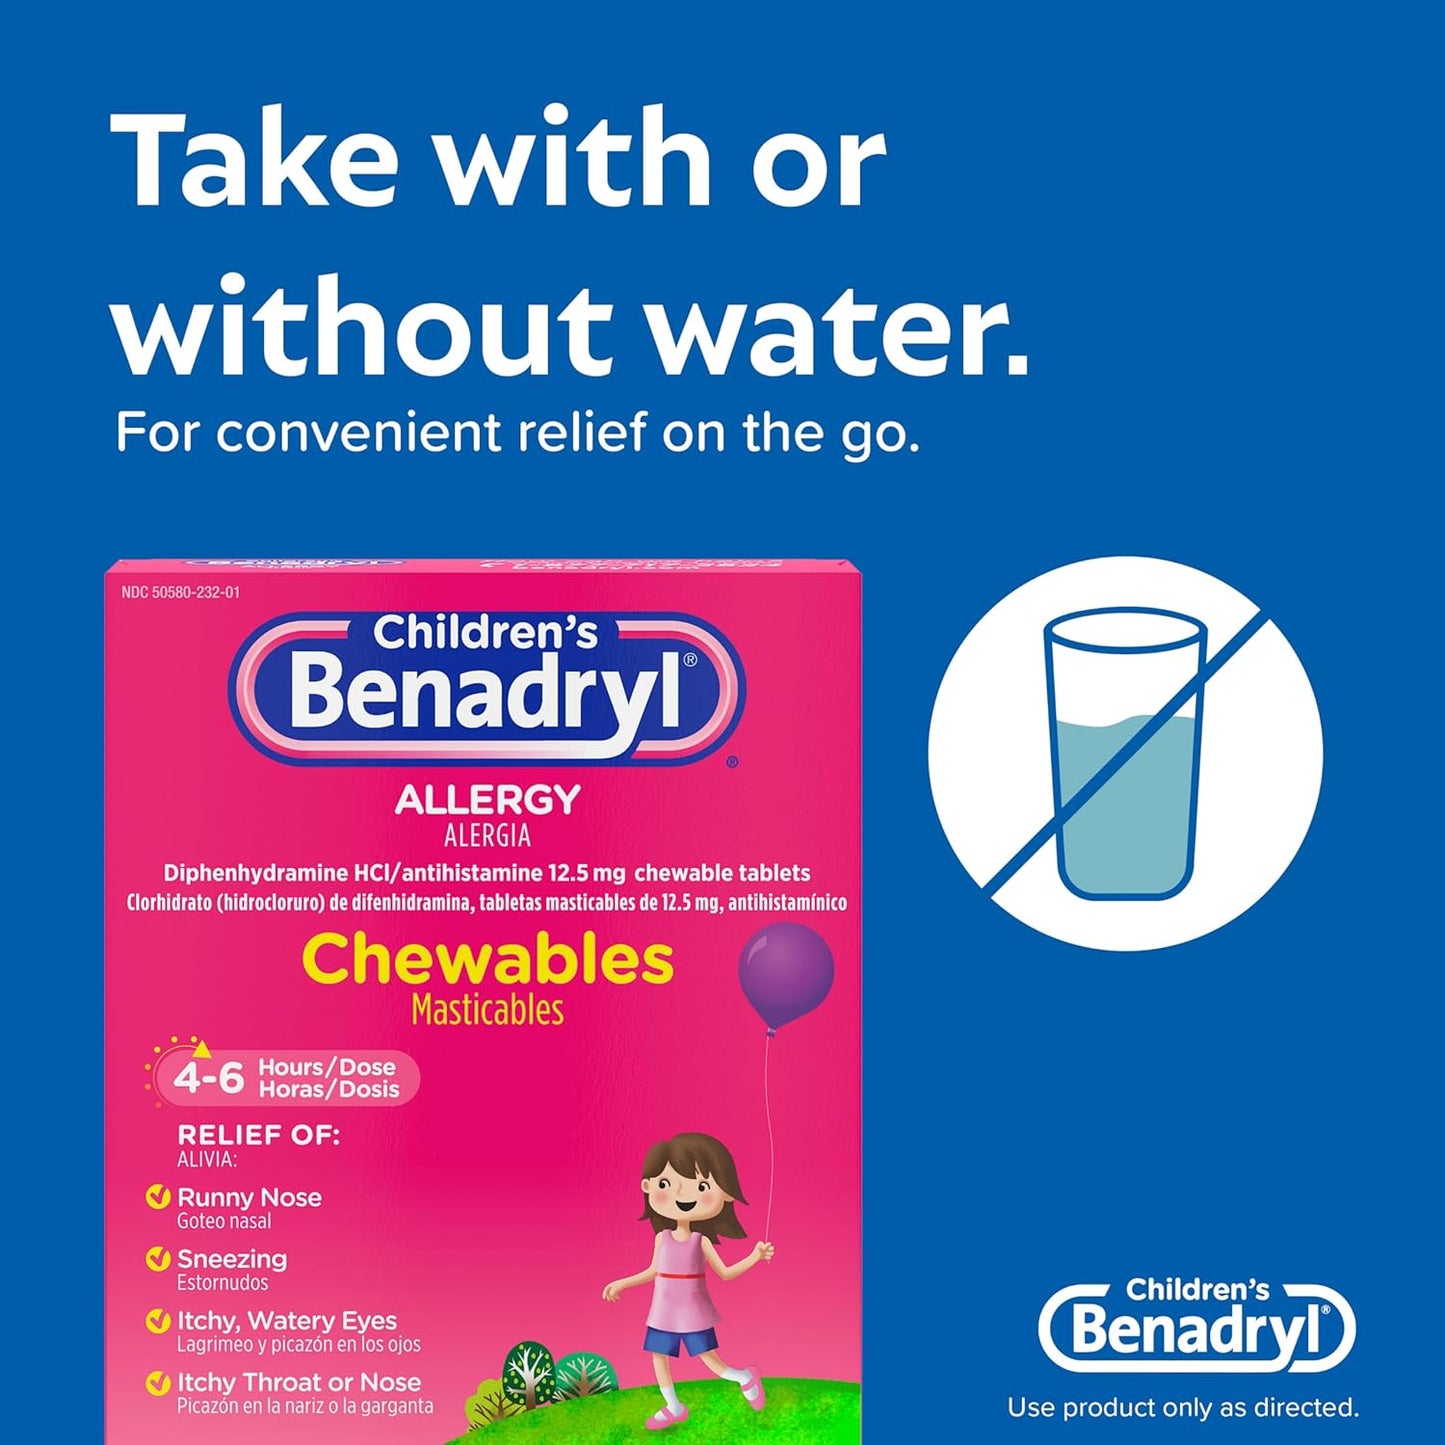 Benadryl Children's Allergy Antihistamine Chewable Tablets Grape Flavor -  3 x 20 = 60 Count